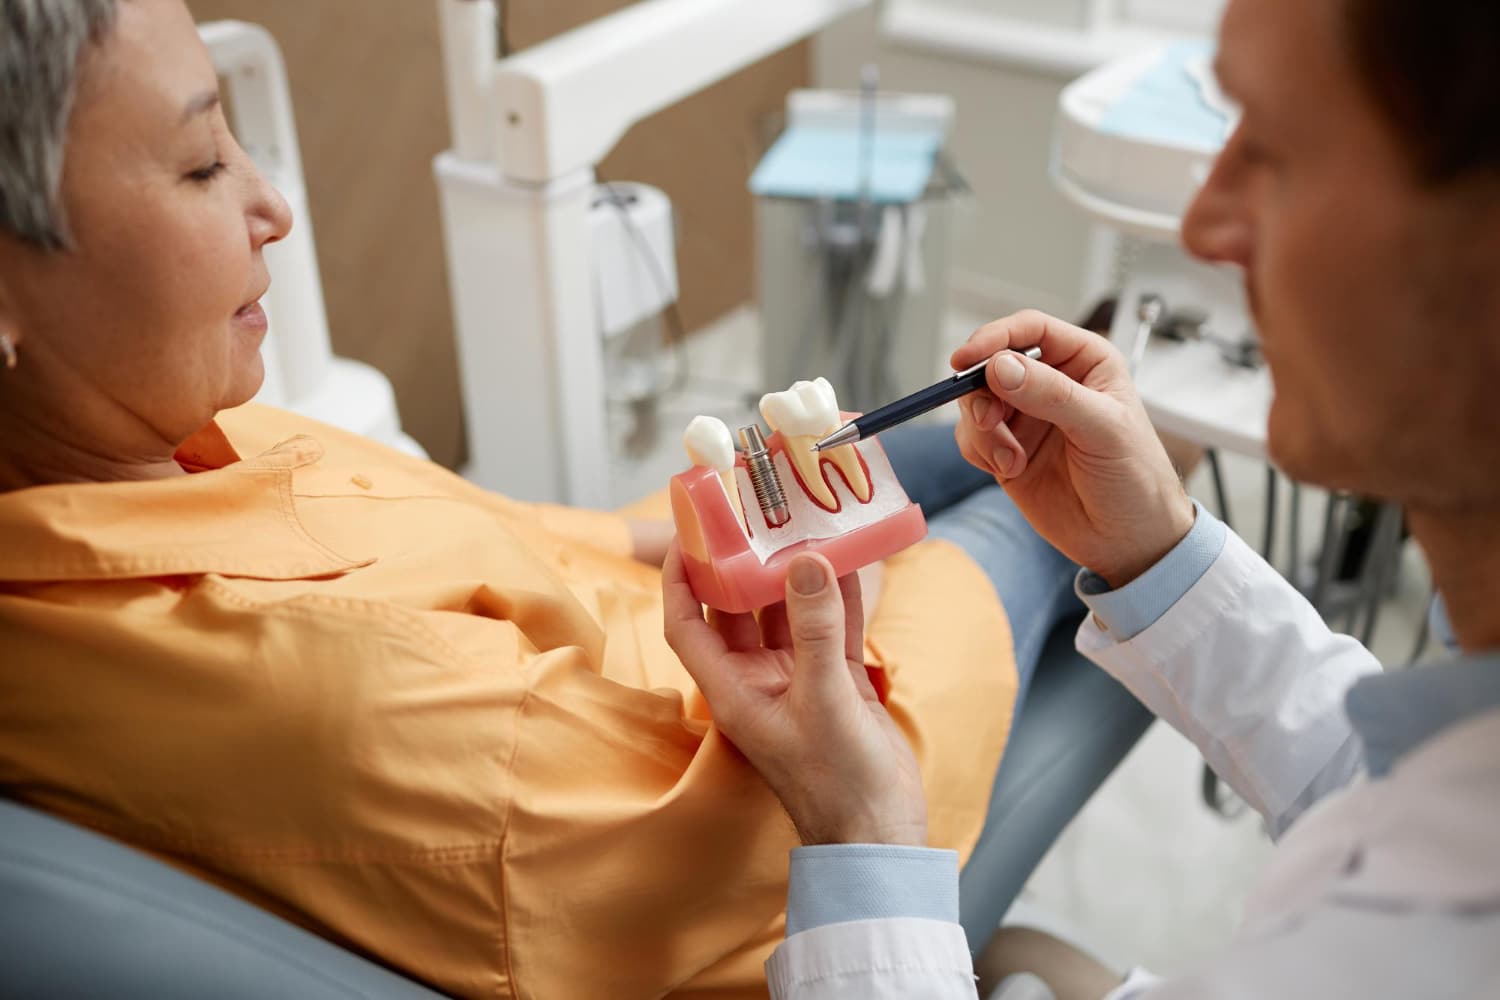 5 Dental Procedures Your General Dentist Can Do - Perkins Dental